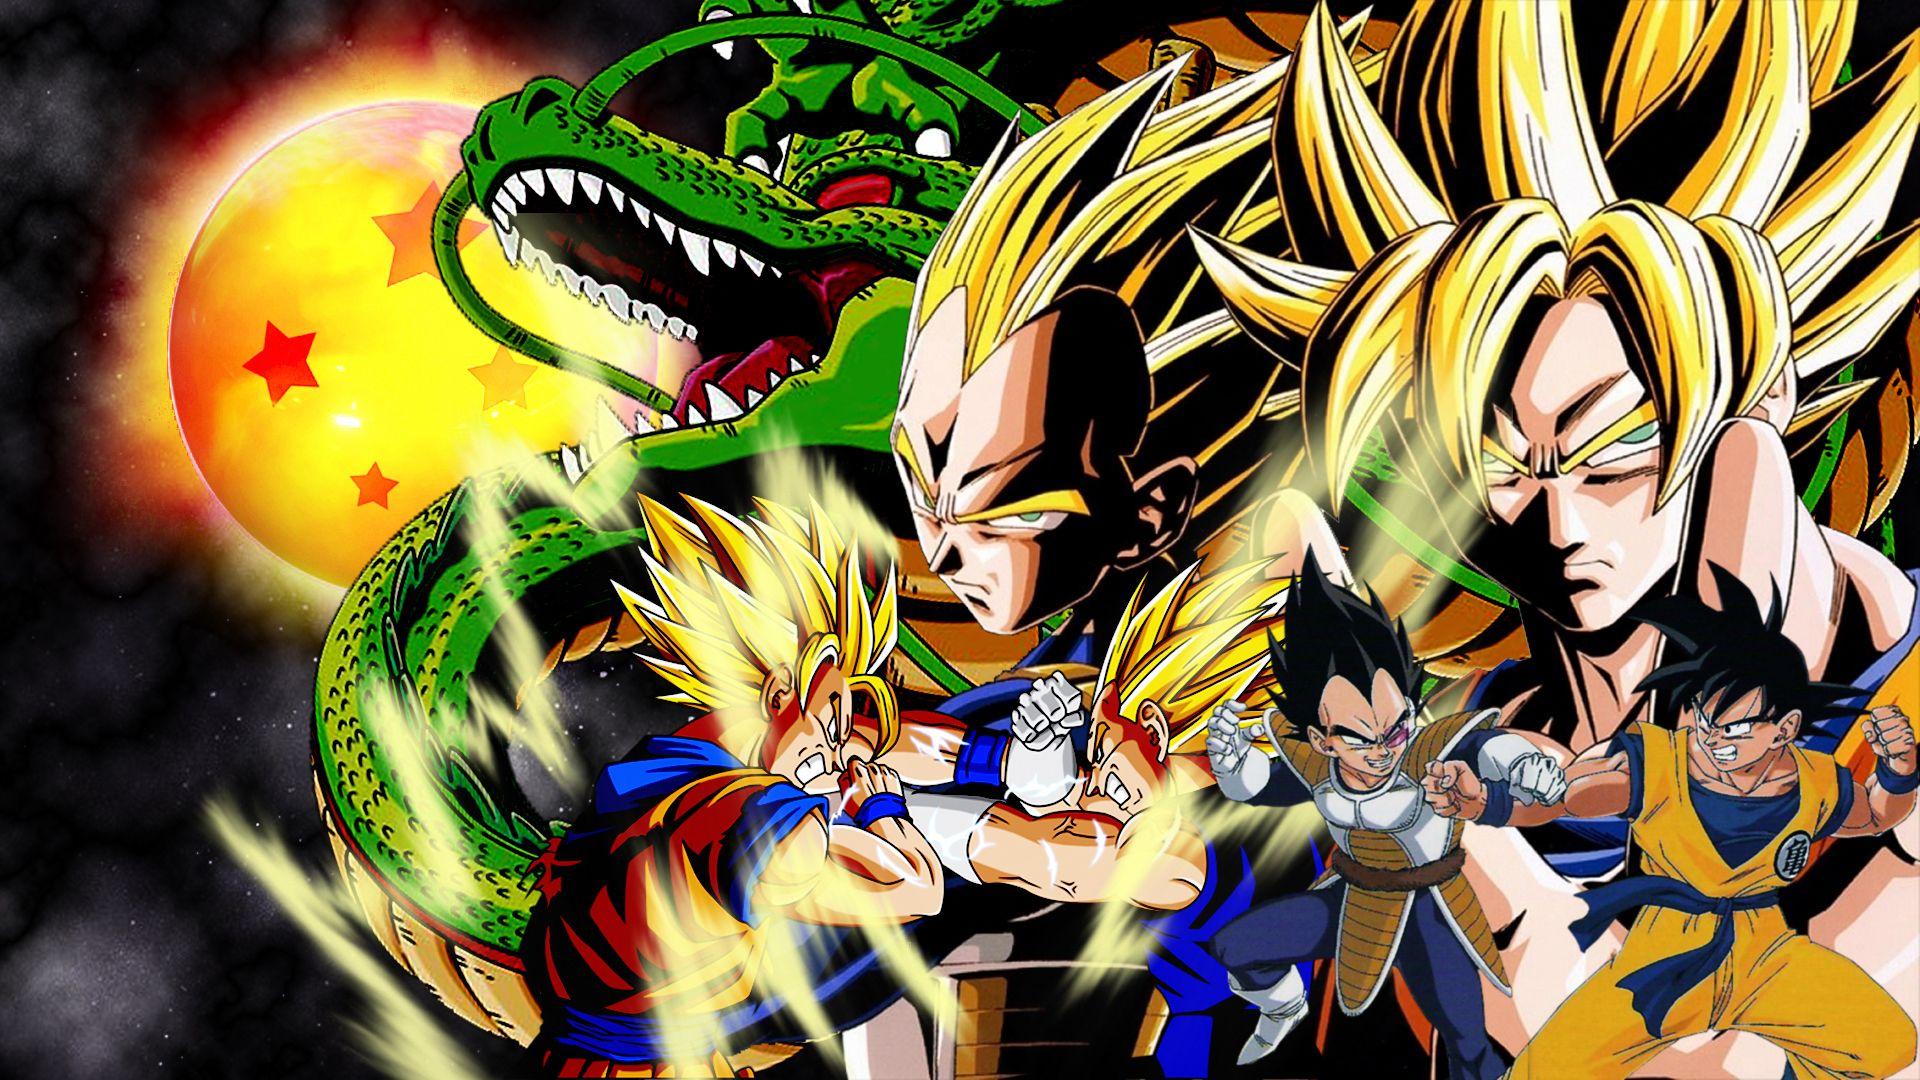 Goku vs vegeta wallpapers by vuLC4no.